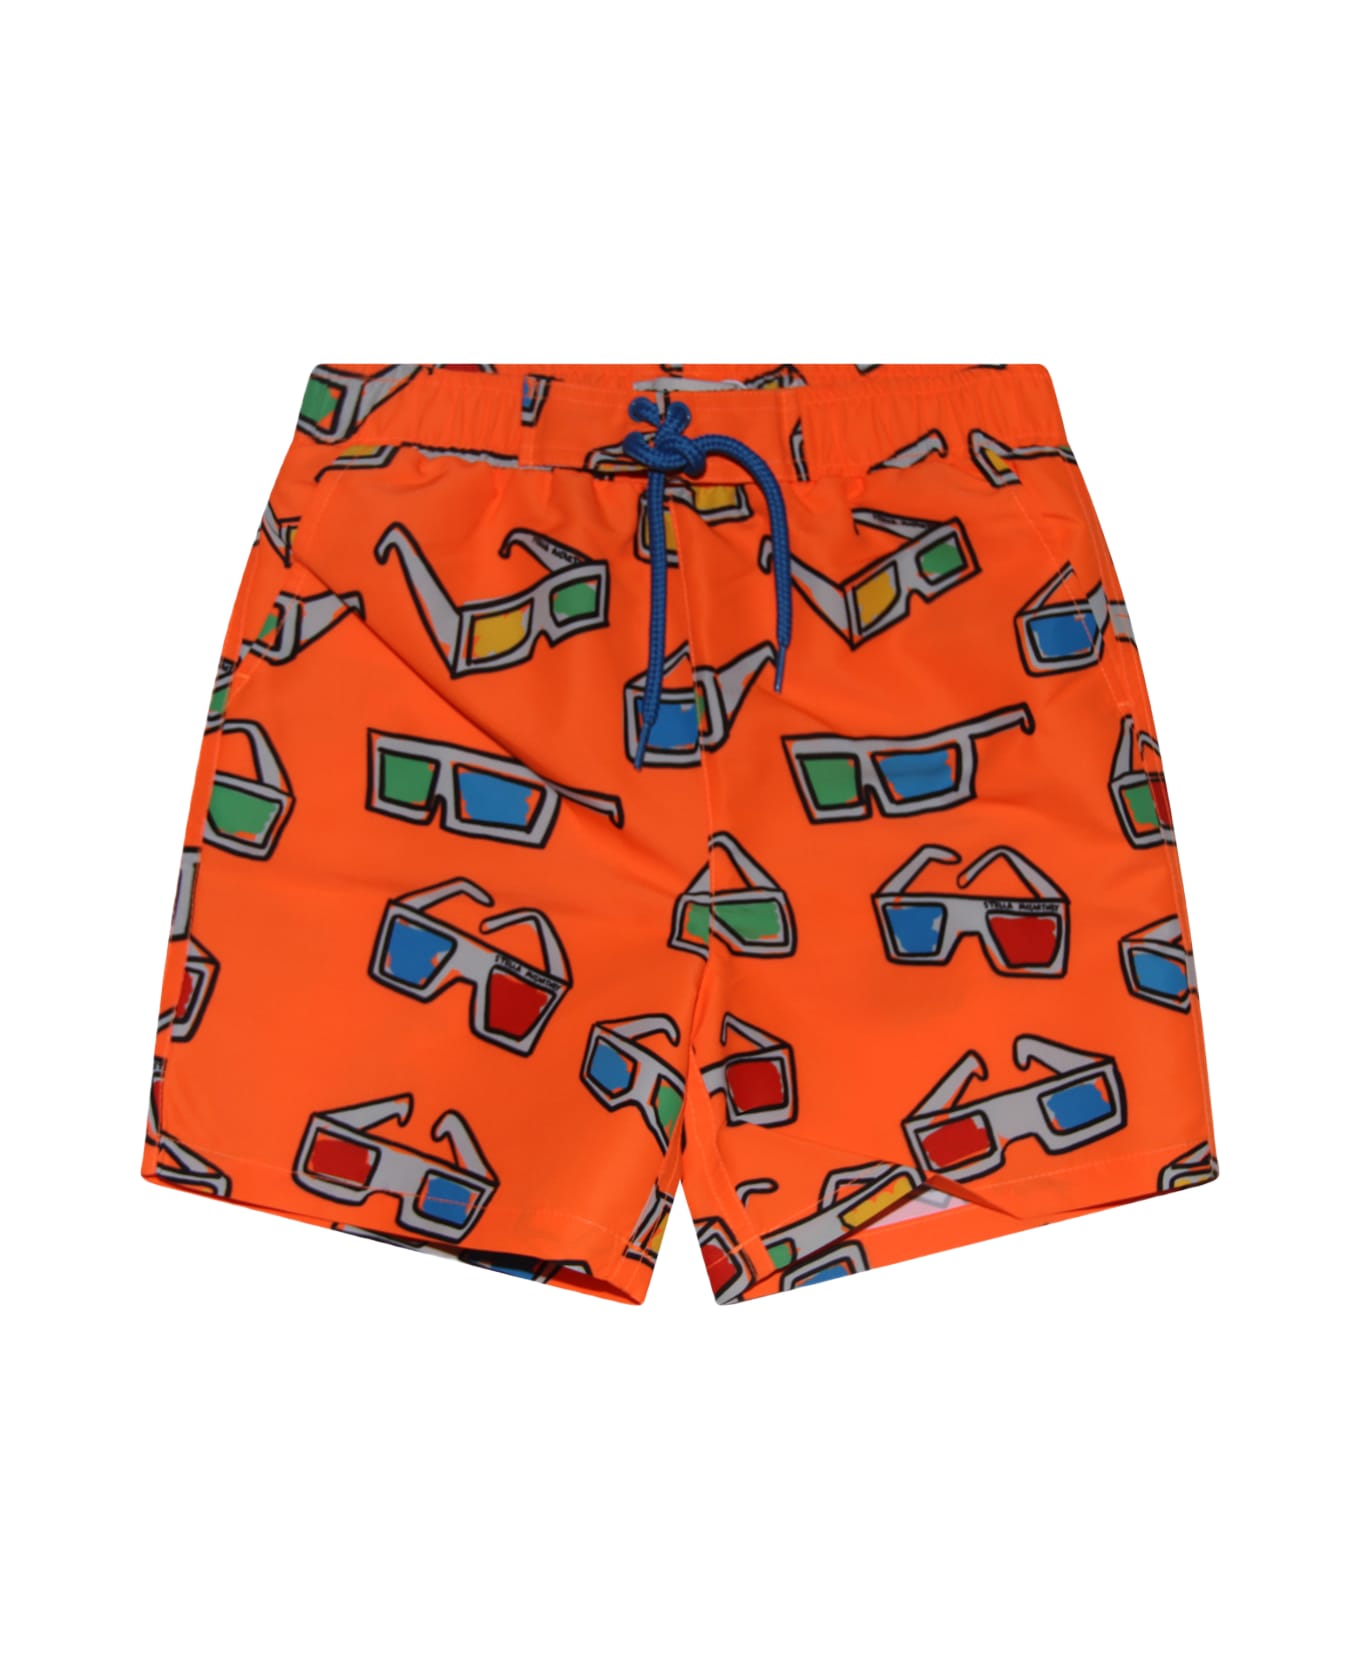 Stella McCartney Orange Multicolour Swim Shorts - ARANCIO/MULTI 水着